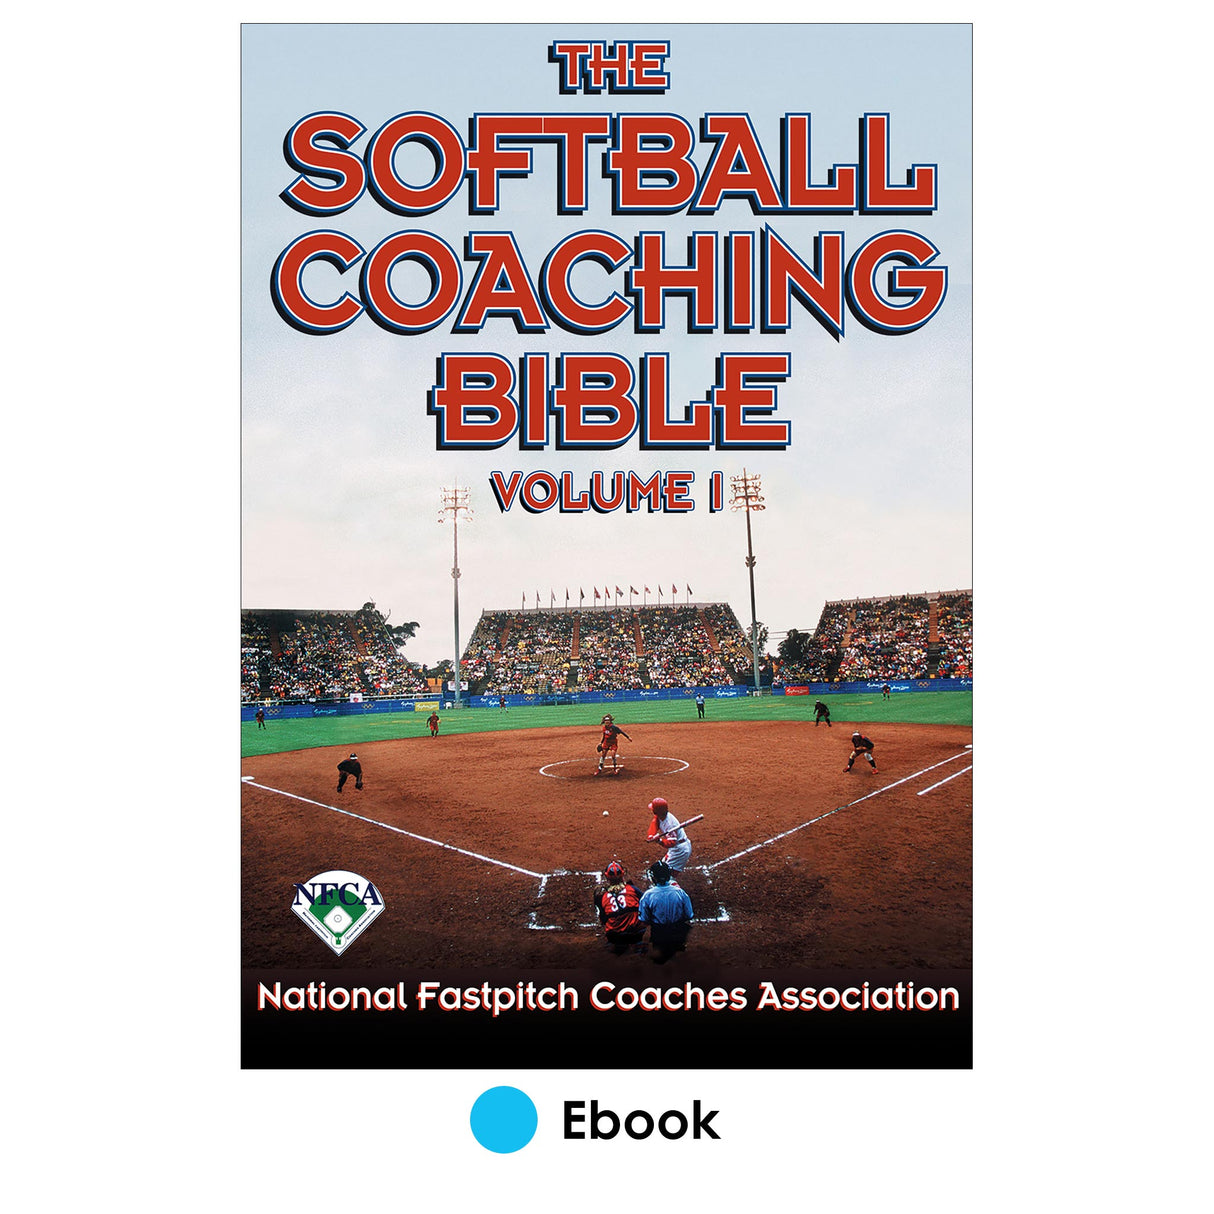 Softball Coaching Bible Volume I PDF, The